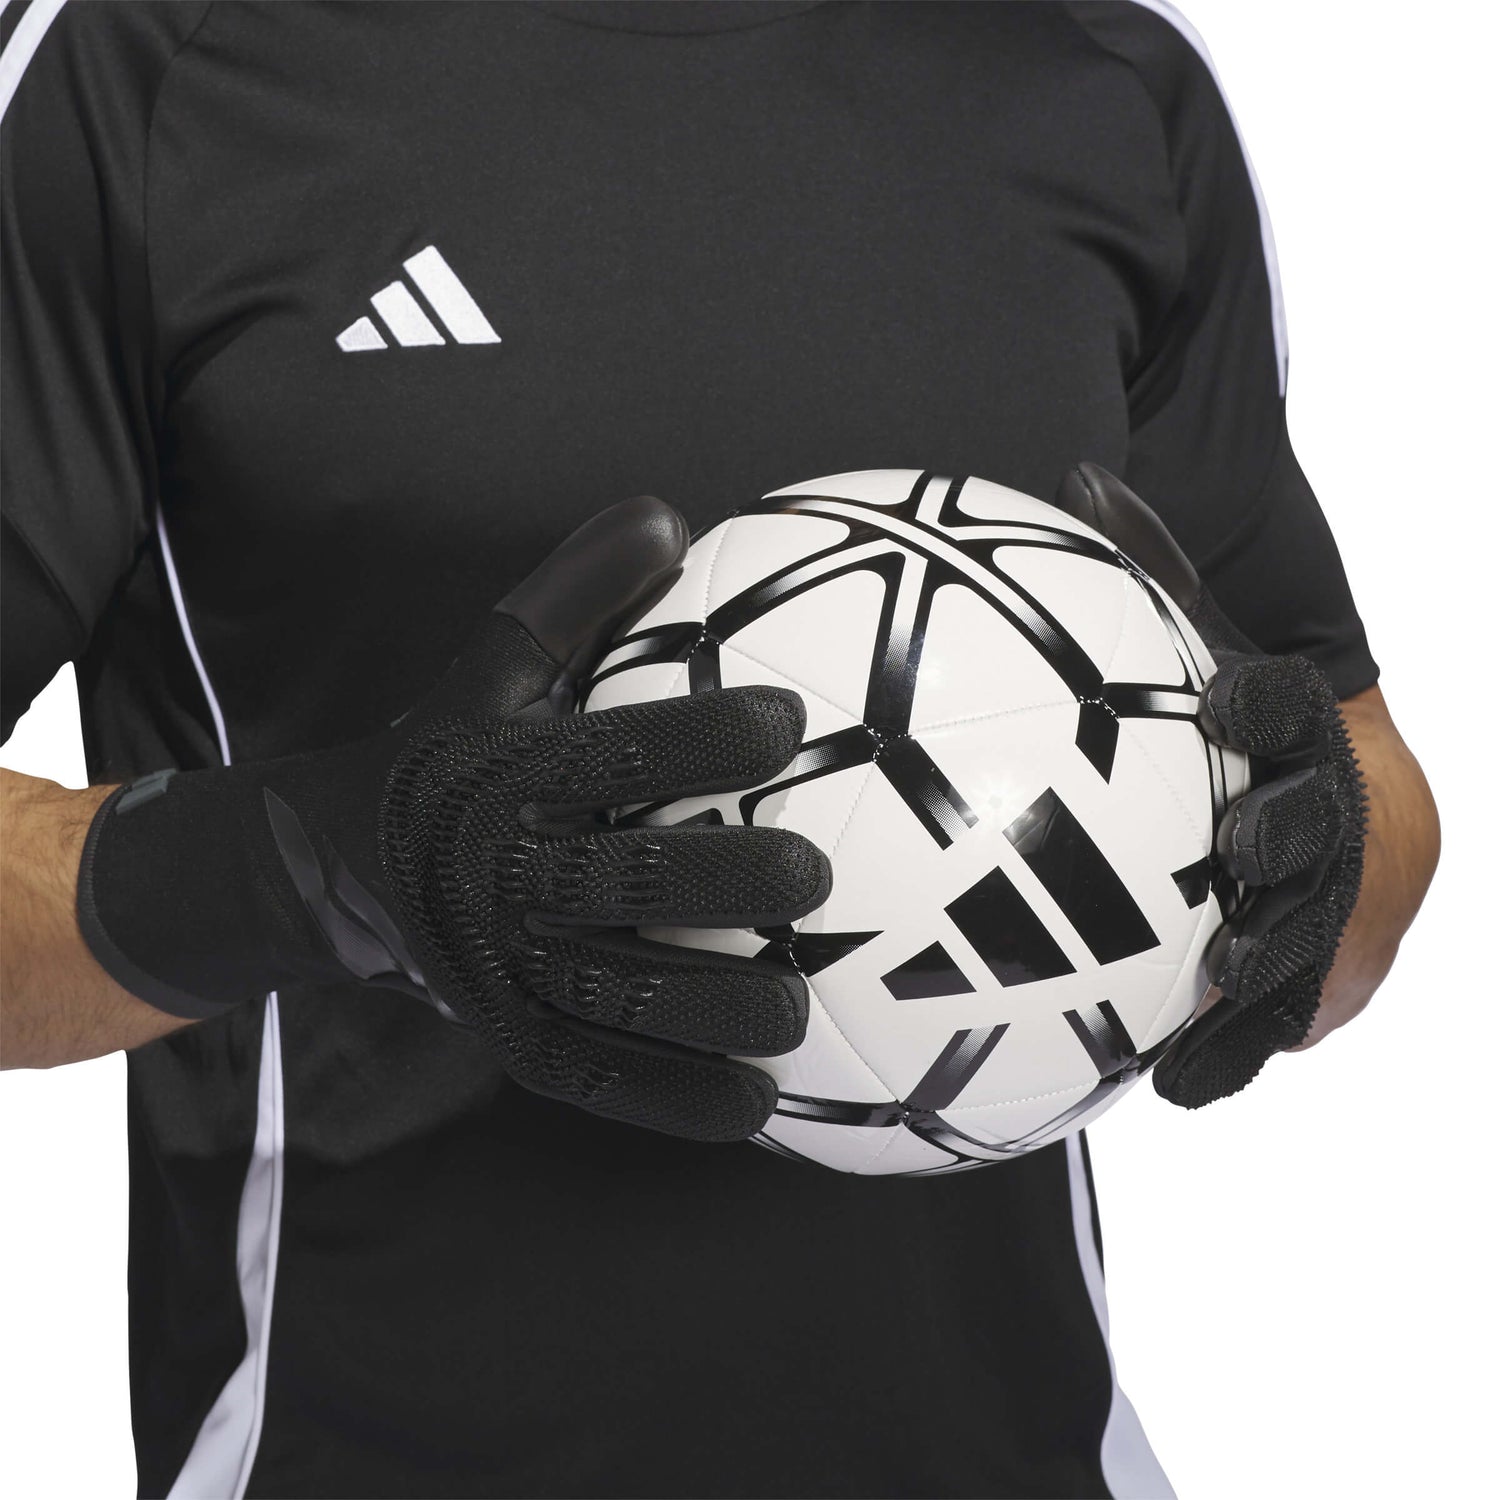 adidas Predator GL Pro Goalkeeper Gloves (Model 1)